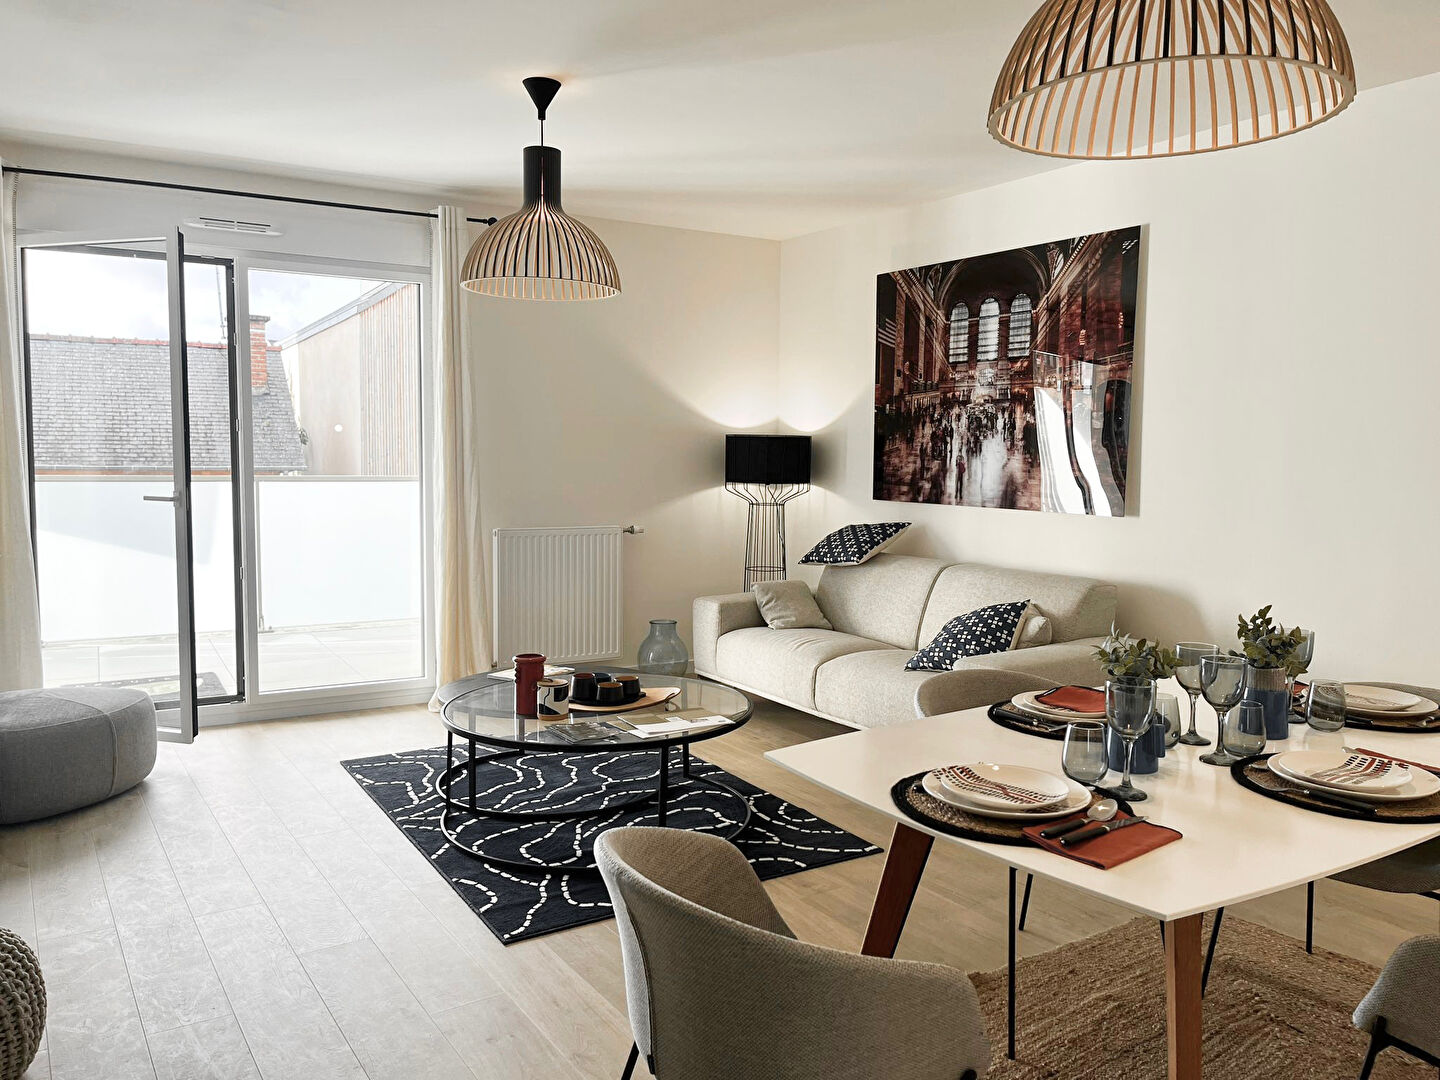 Appartement 4 pièces - 84 m² environ - 54491421b.jpg | Kermarrec Habitation